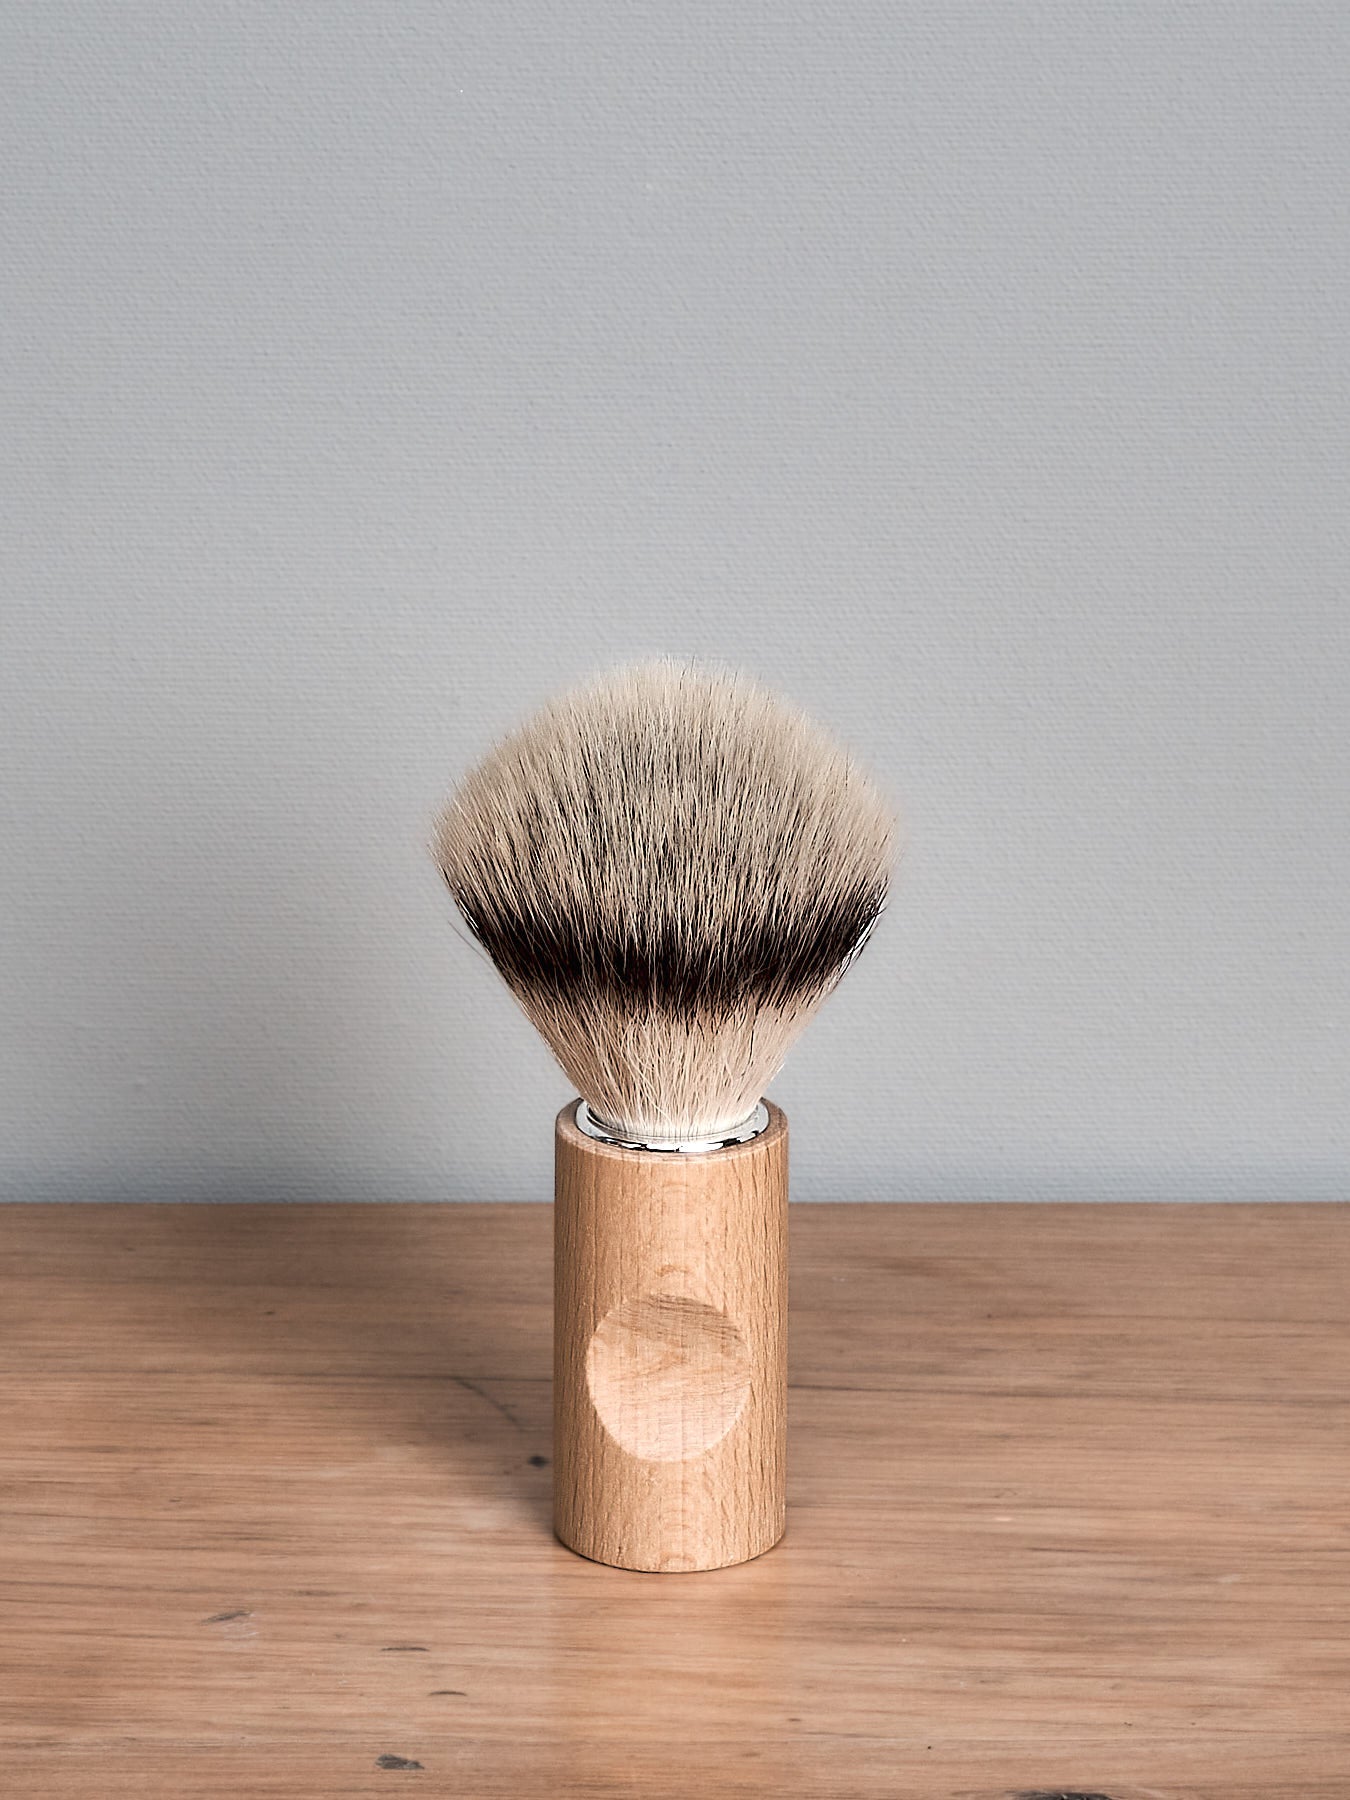 An Iris Hantverk Shaving Brush – Silver Tip sitting on top of a wooden stand.